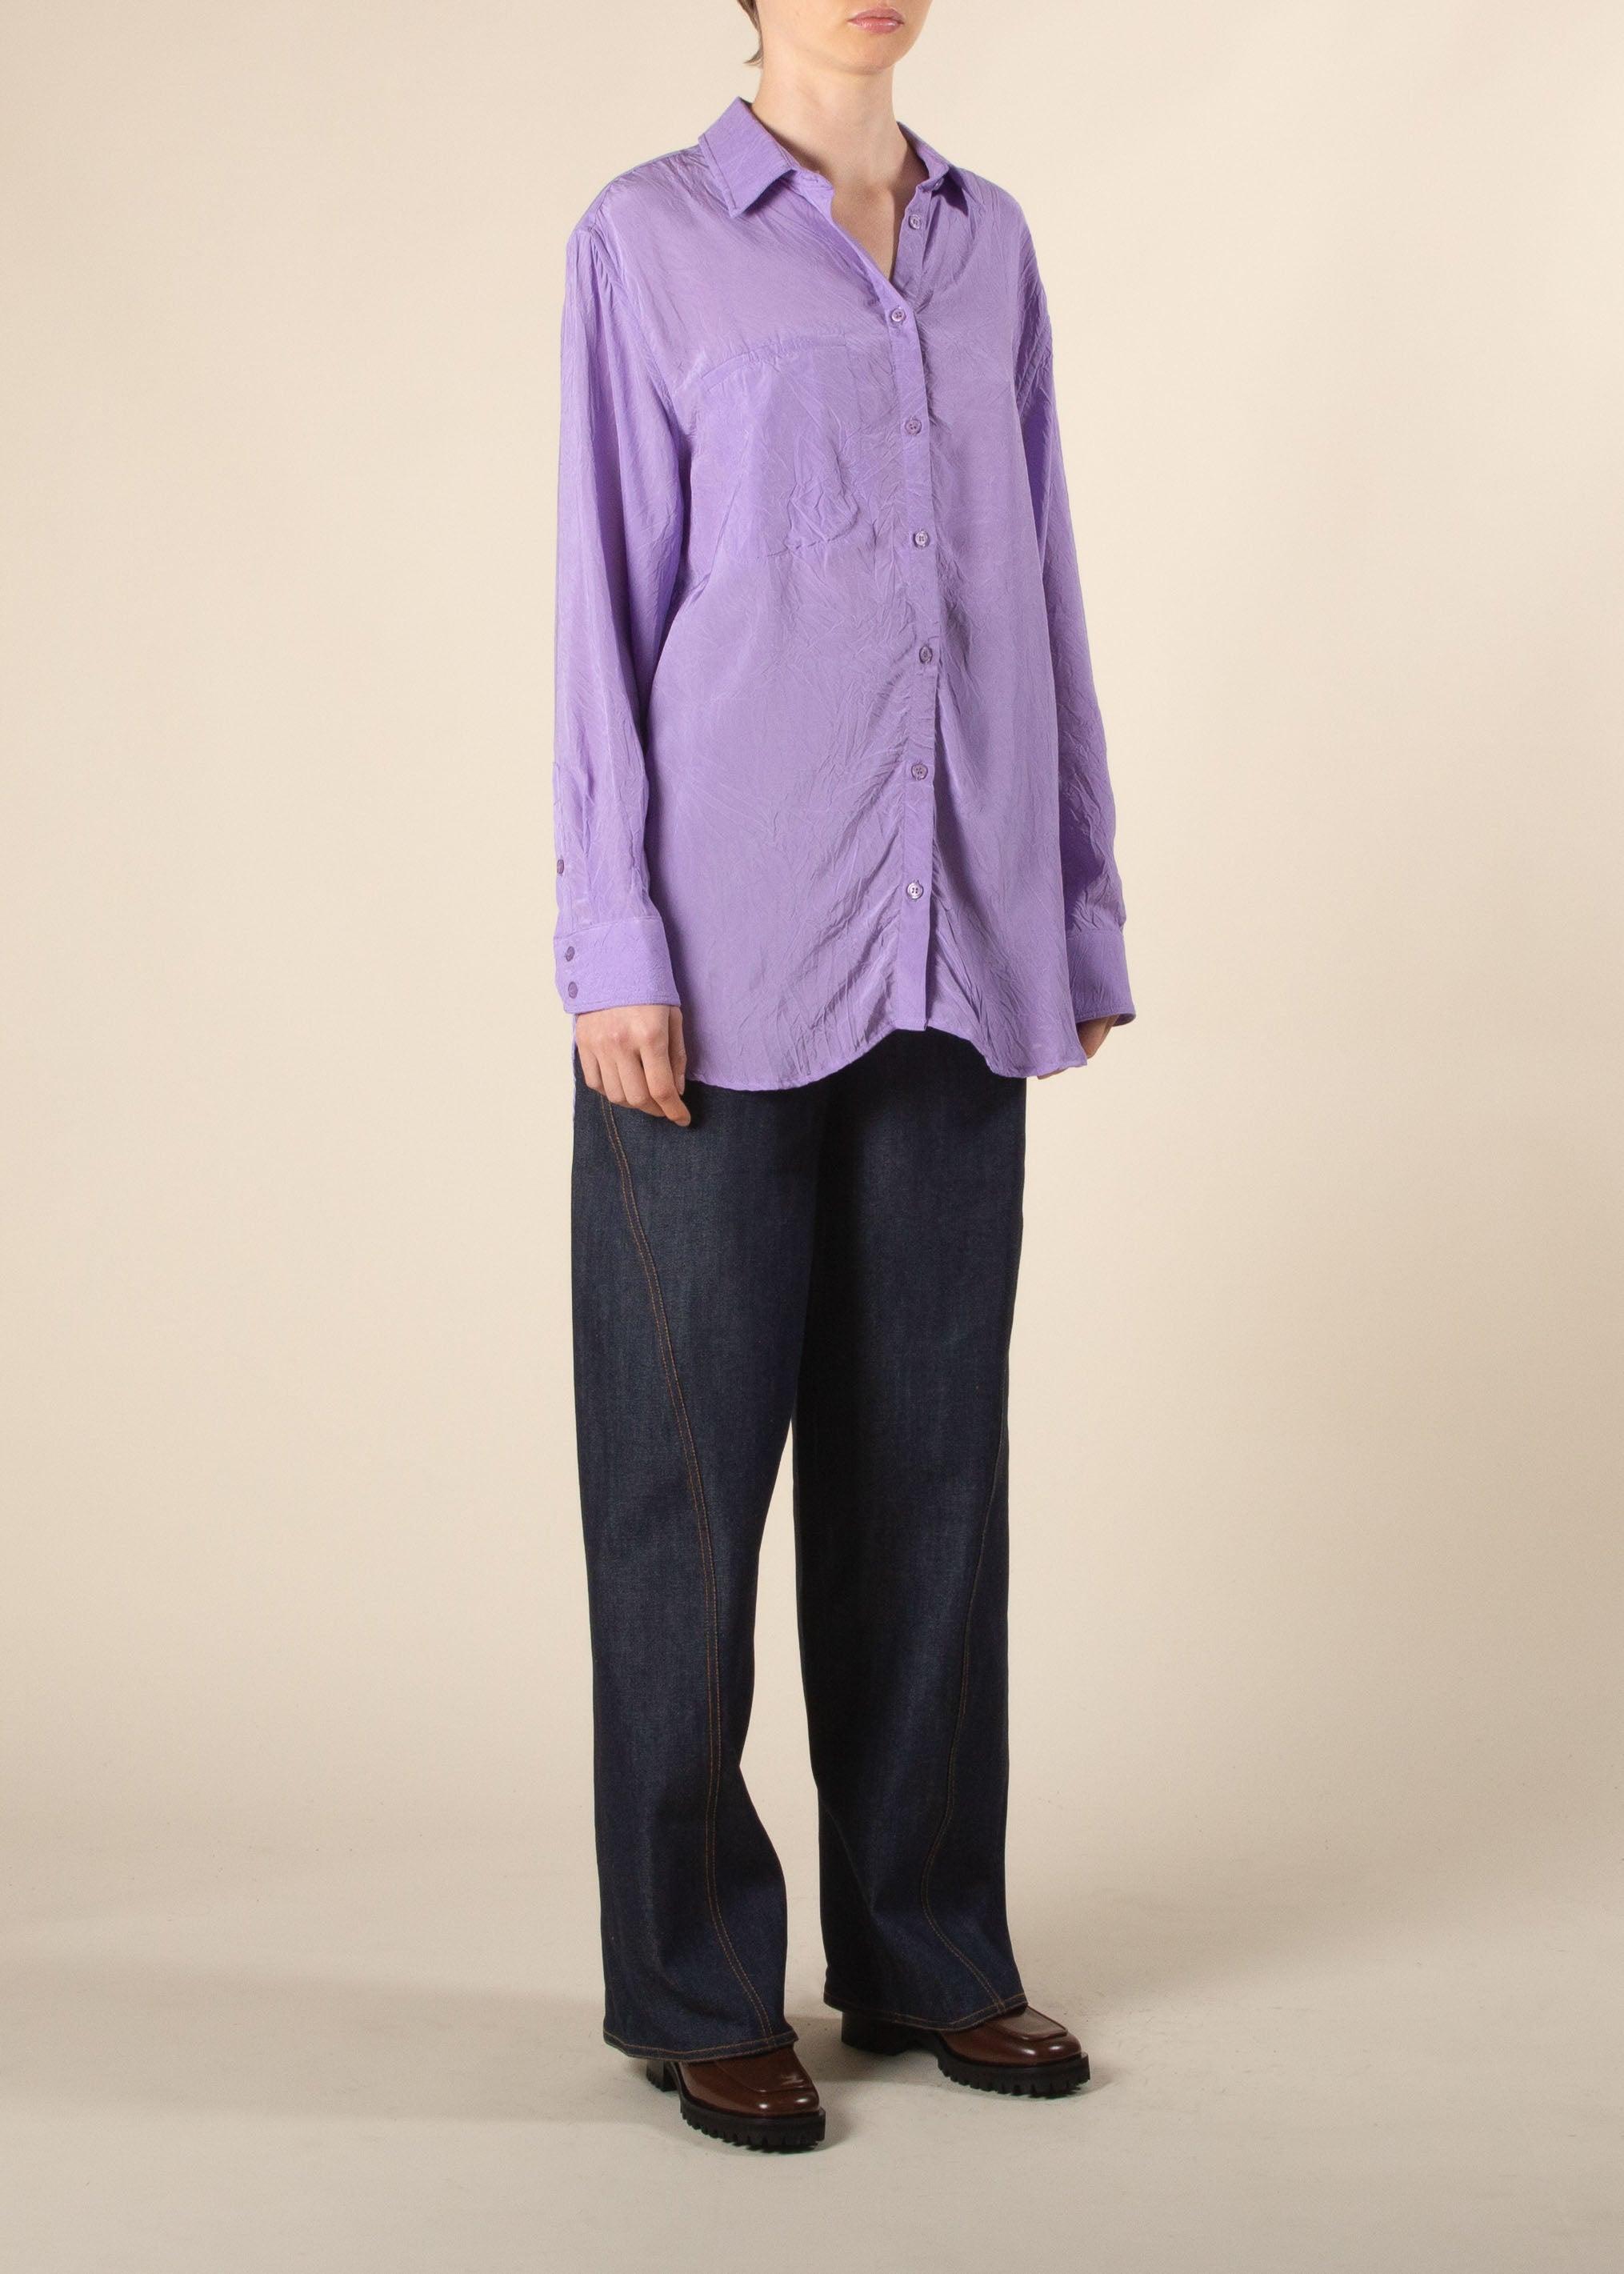 Elleme Soft Shirt in Purple | Lyst